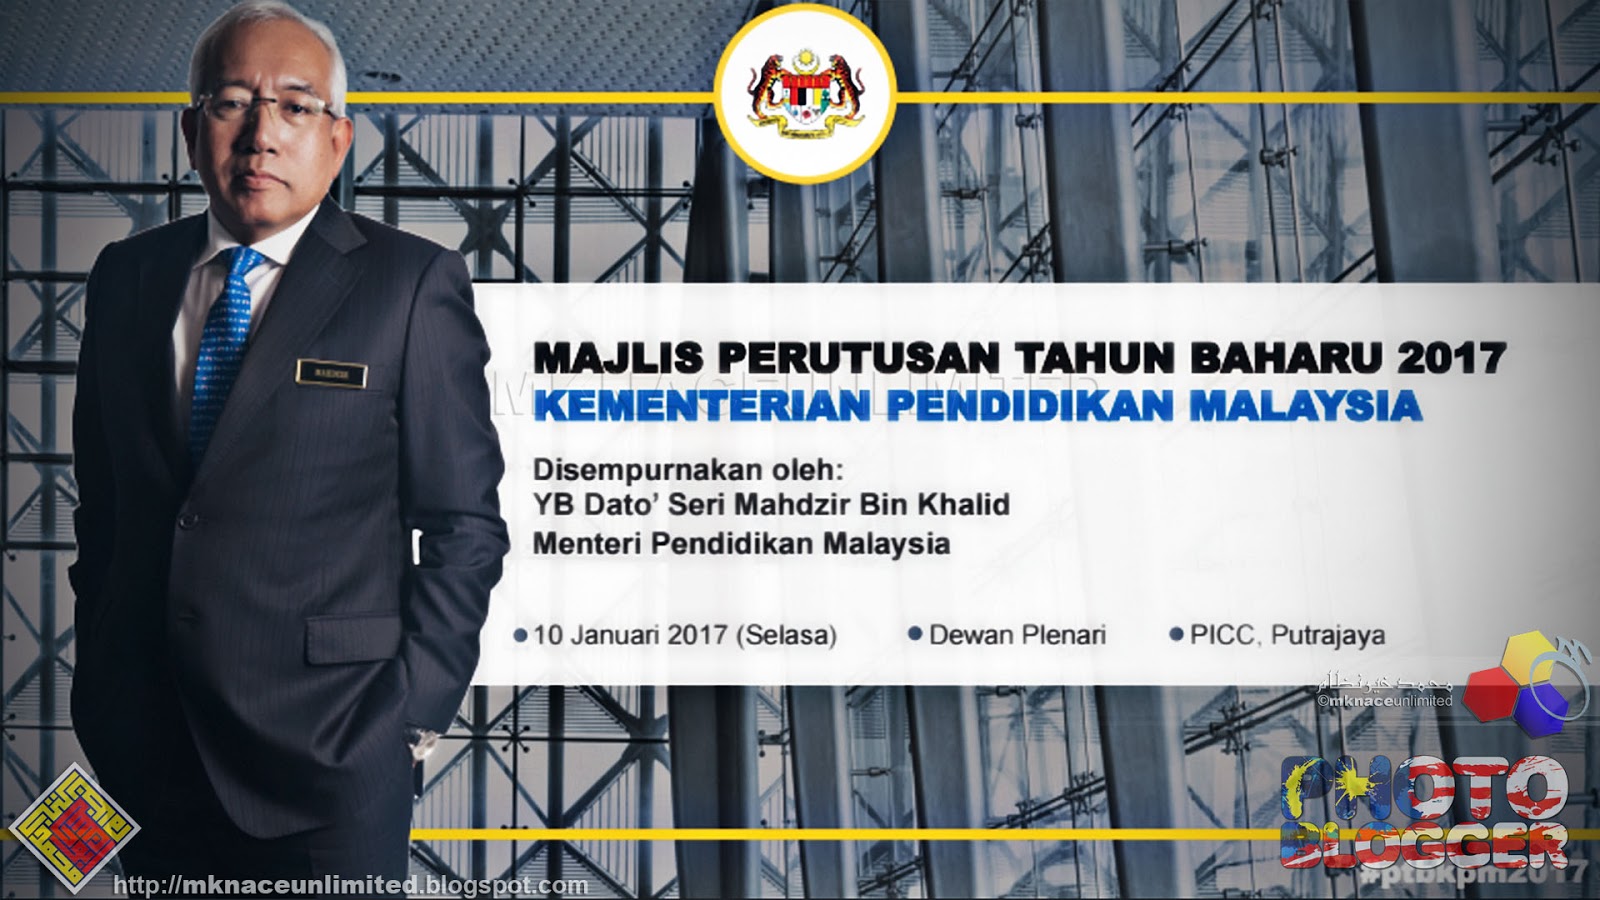 Menteri Pendidikan Malaysia 2017